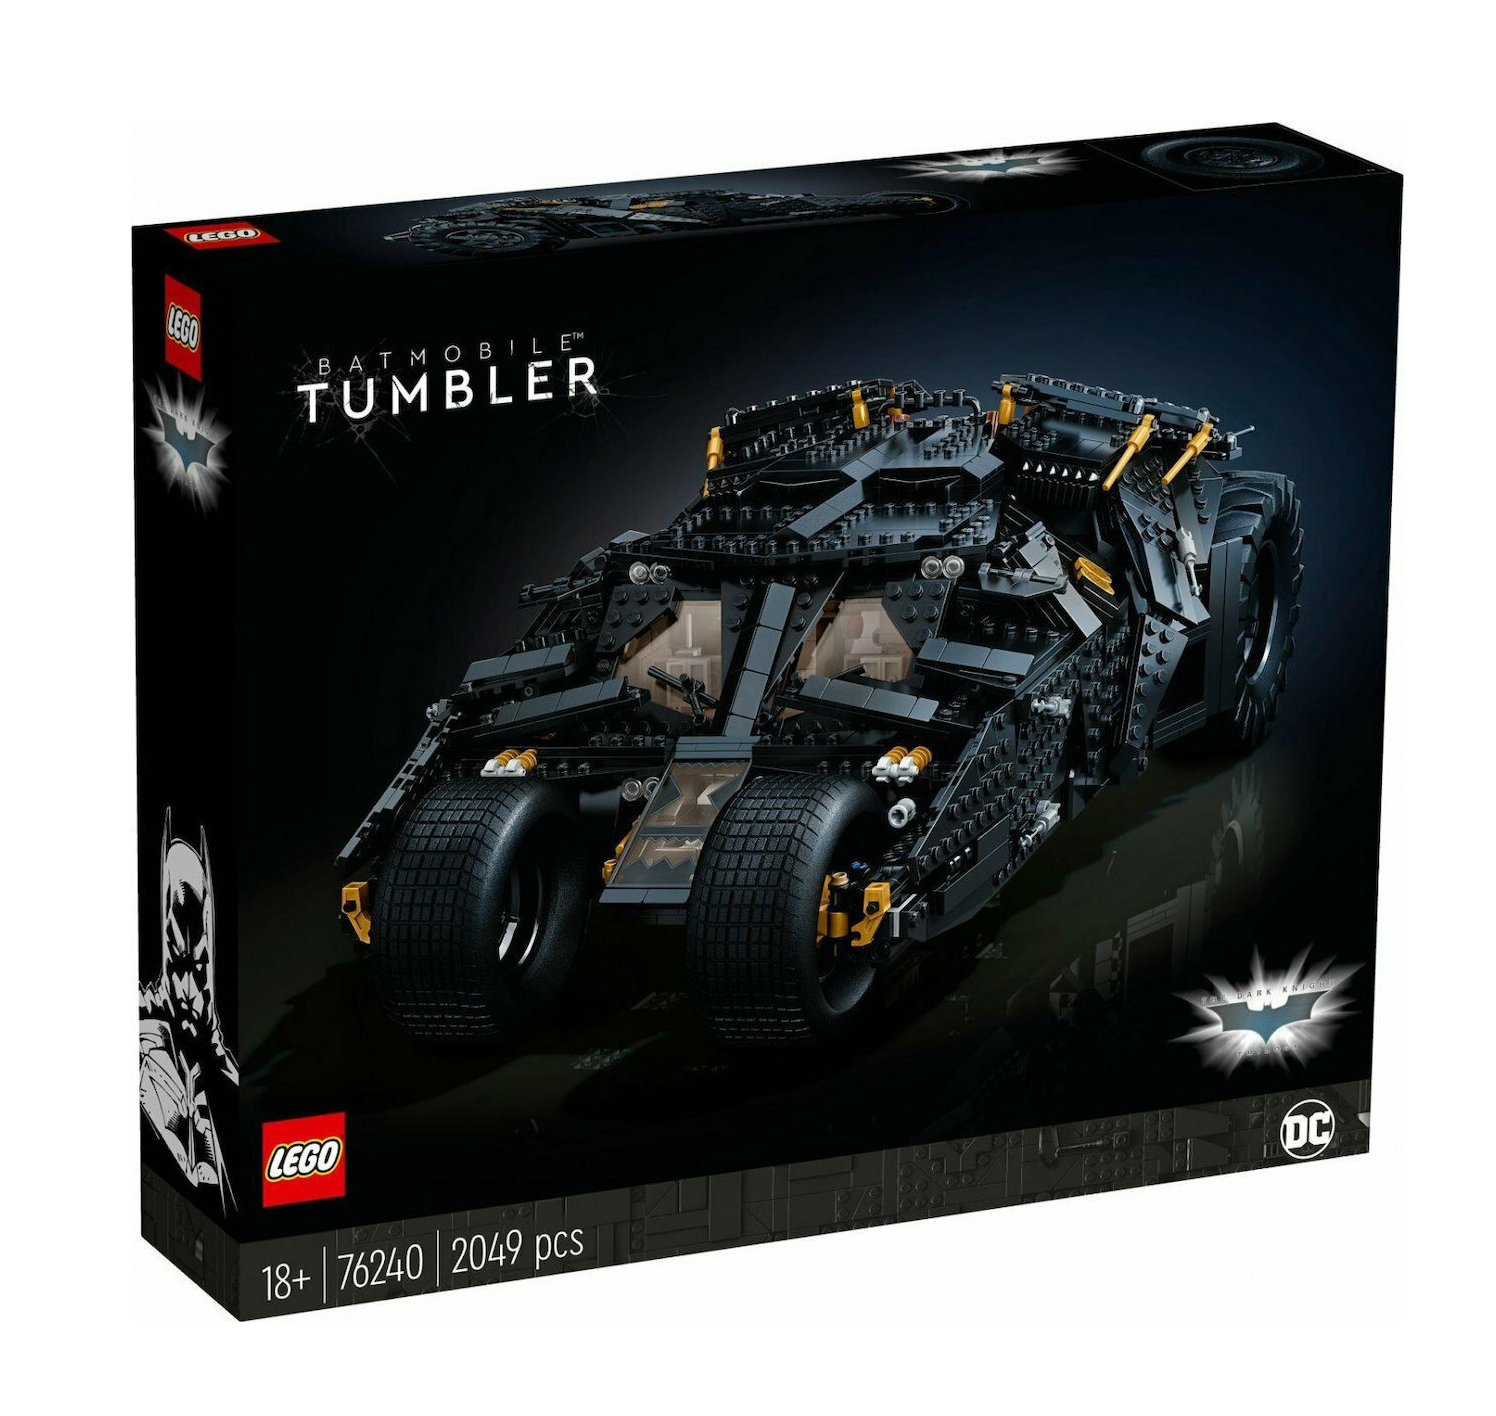 Lego DC Super Heroes: Batman Batmobile Tumbler 76240